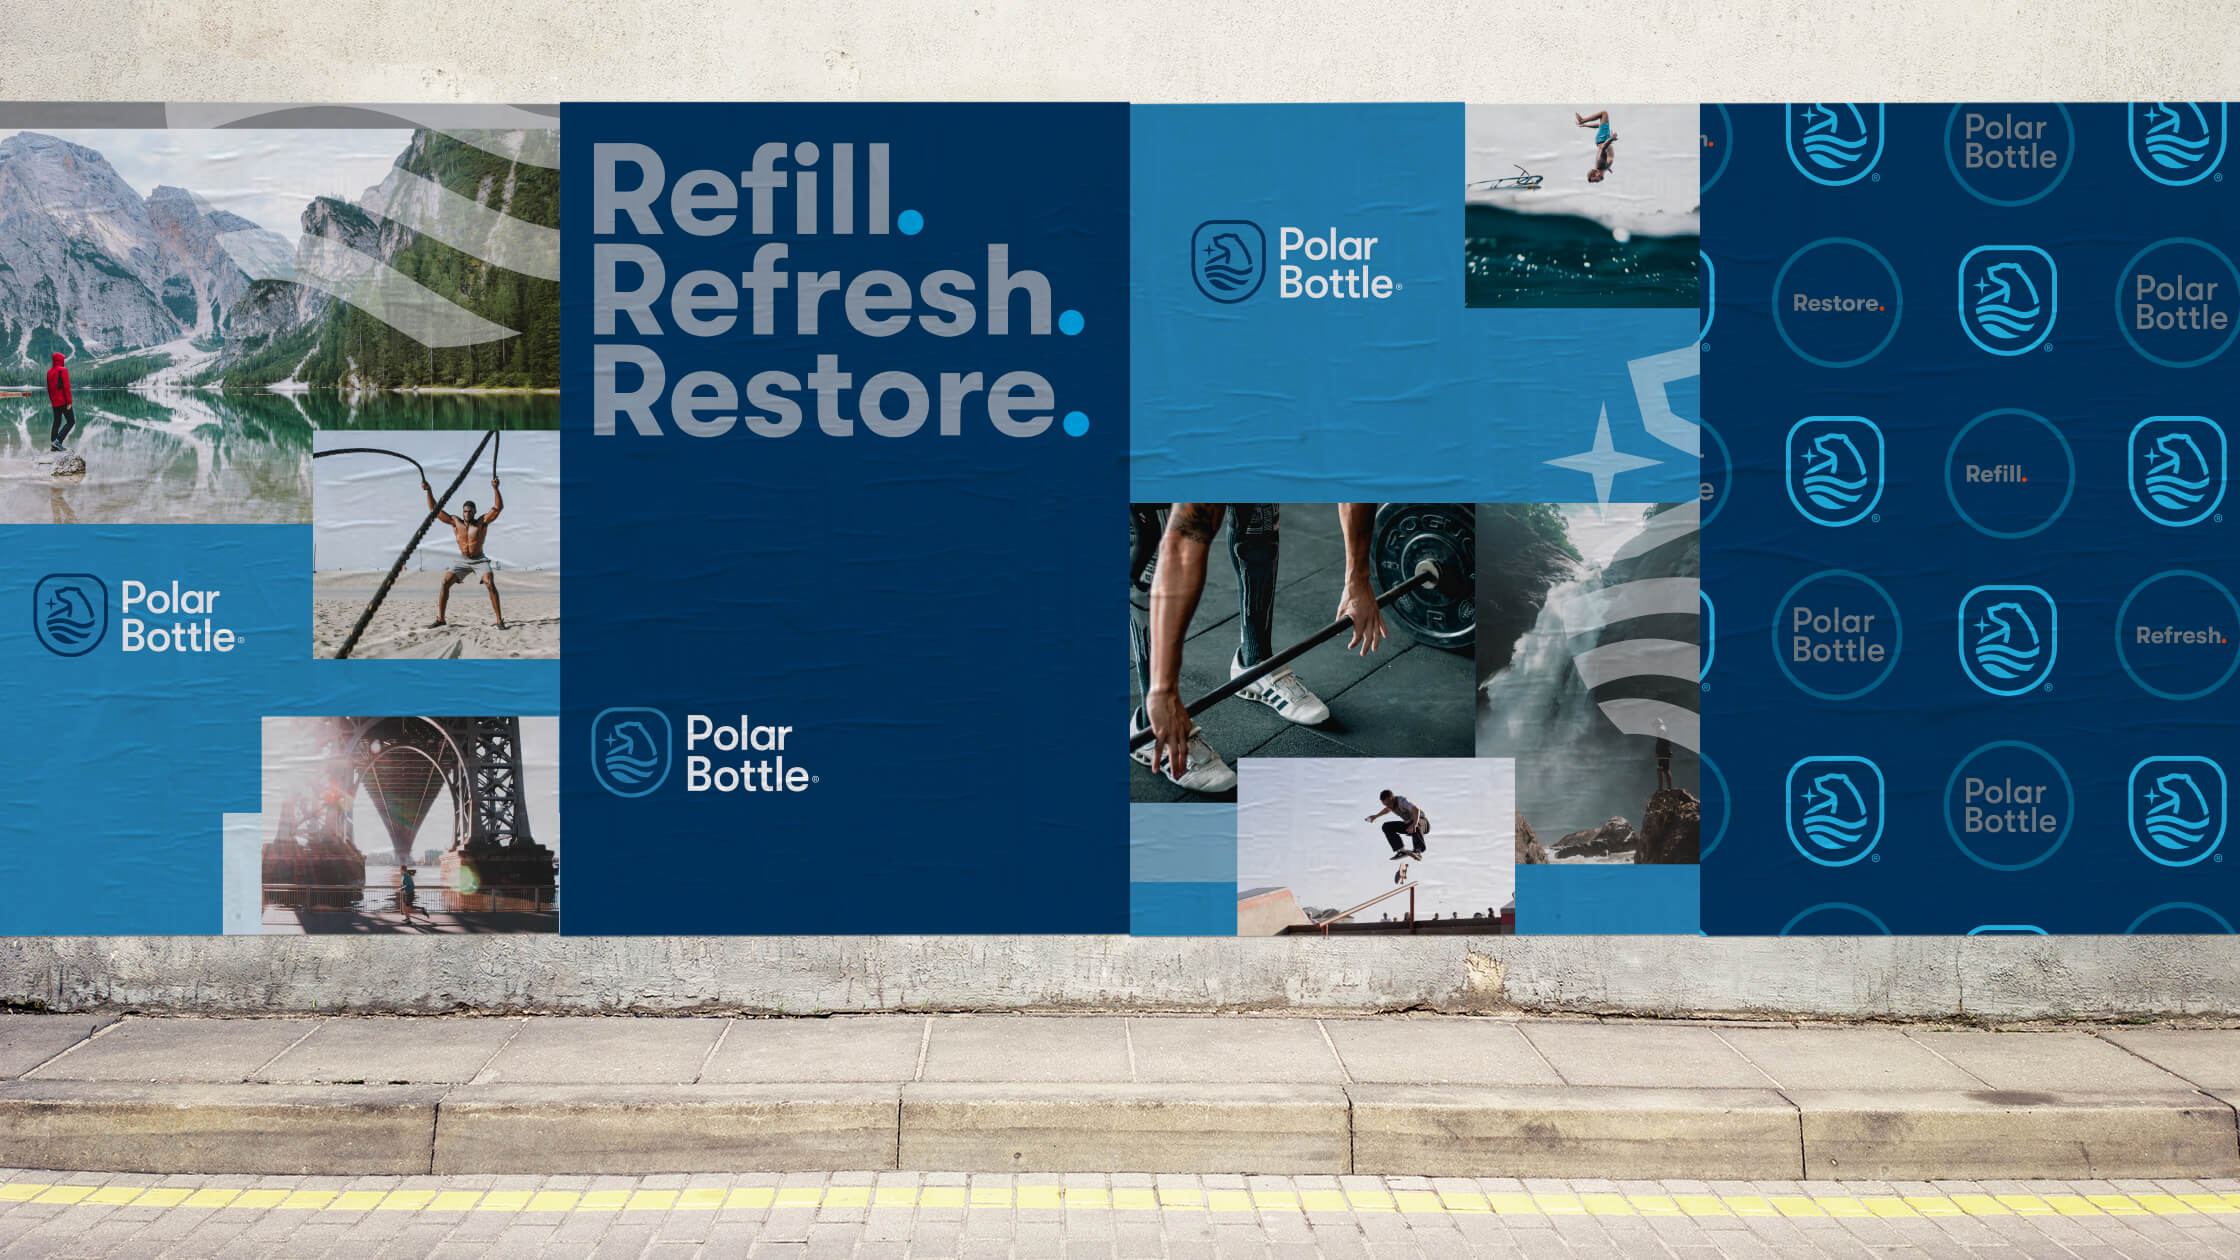 Polar Bottle Advertising Campaign